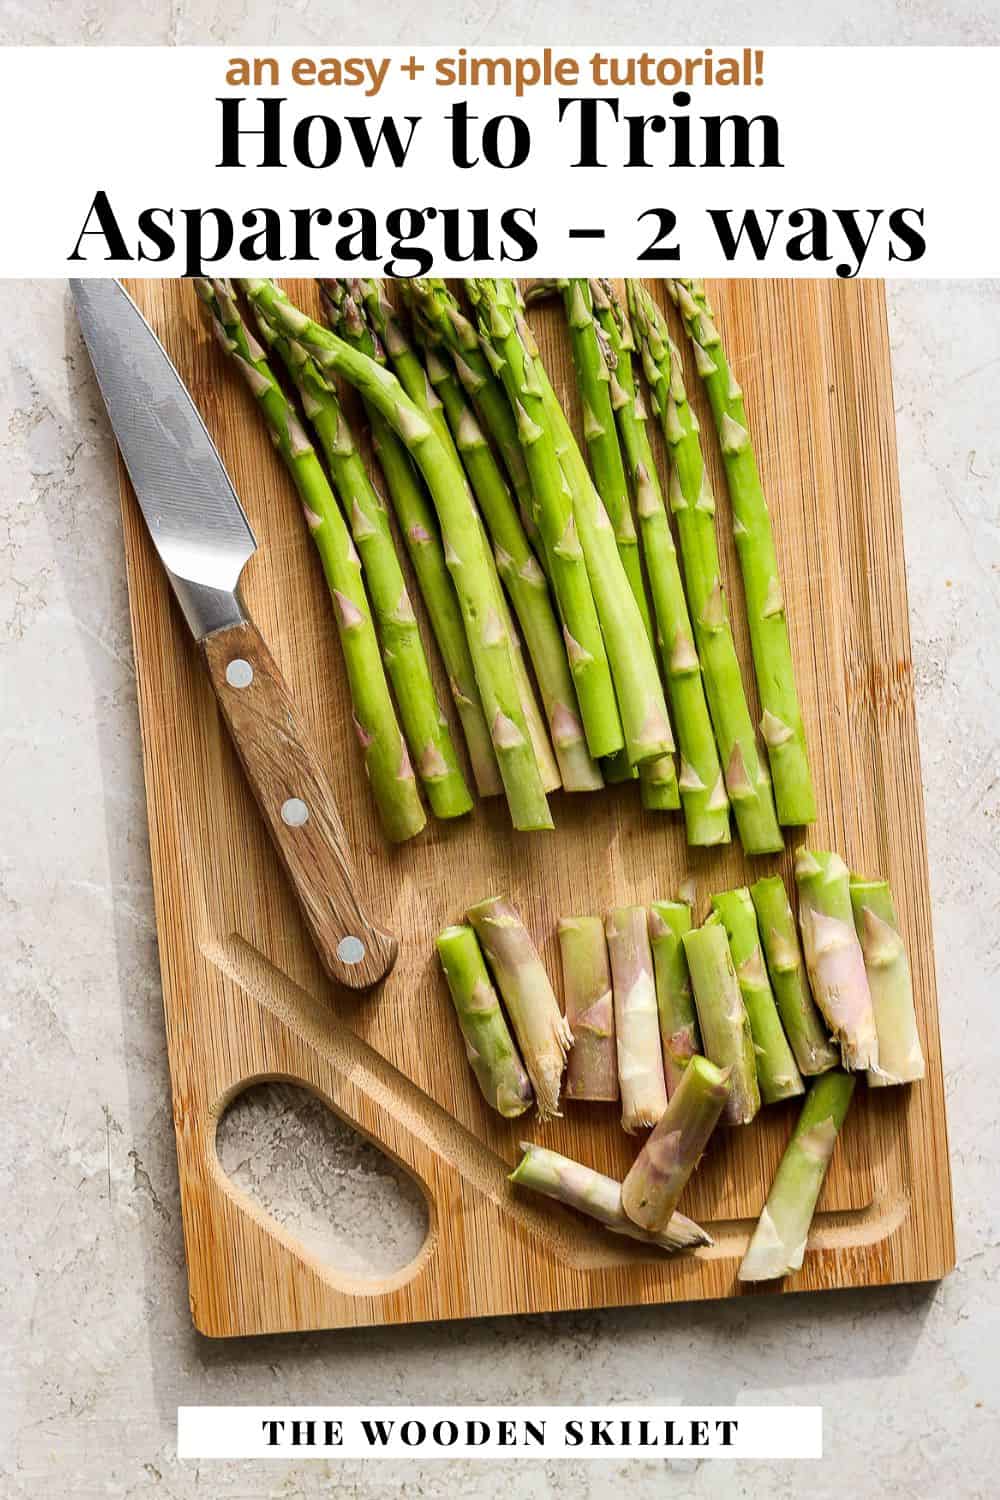 Pinterest image for how to trim asparagus.